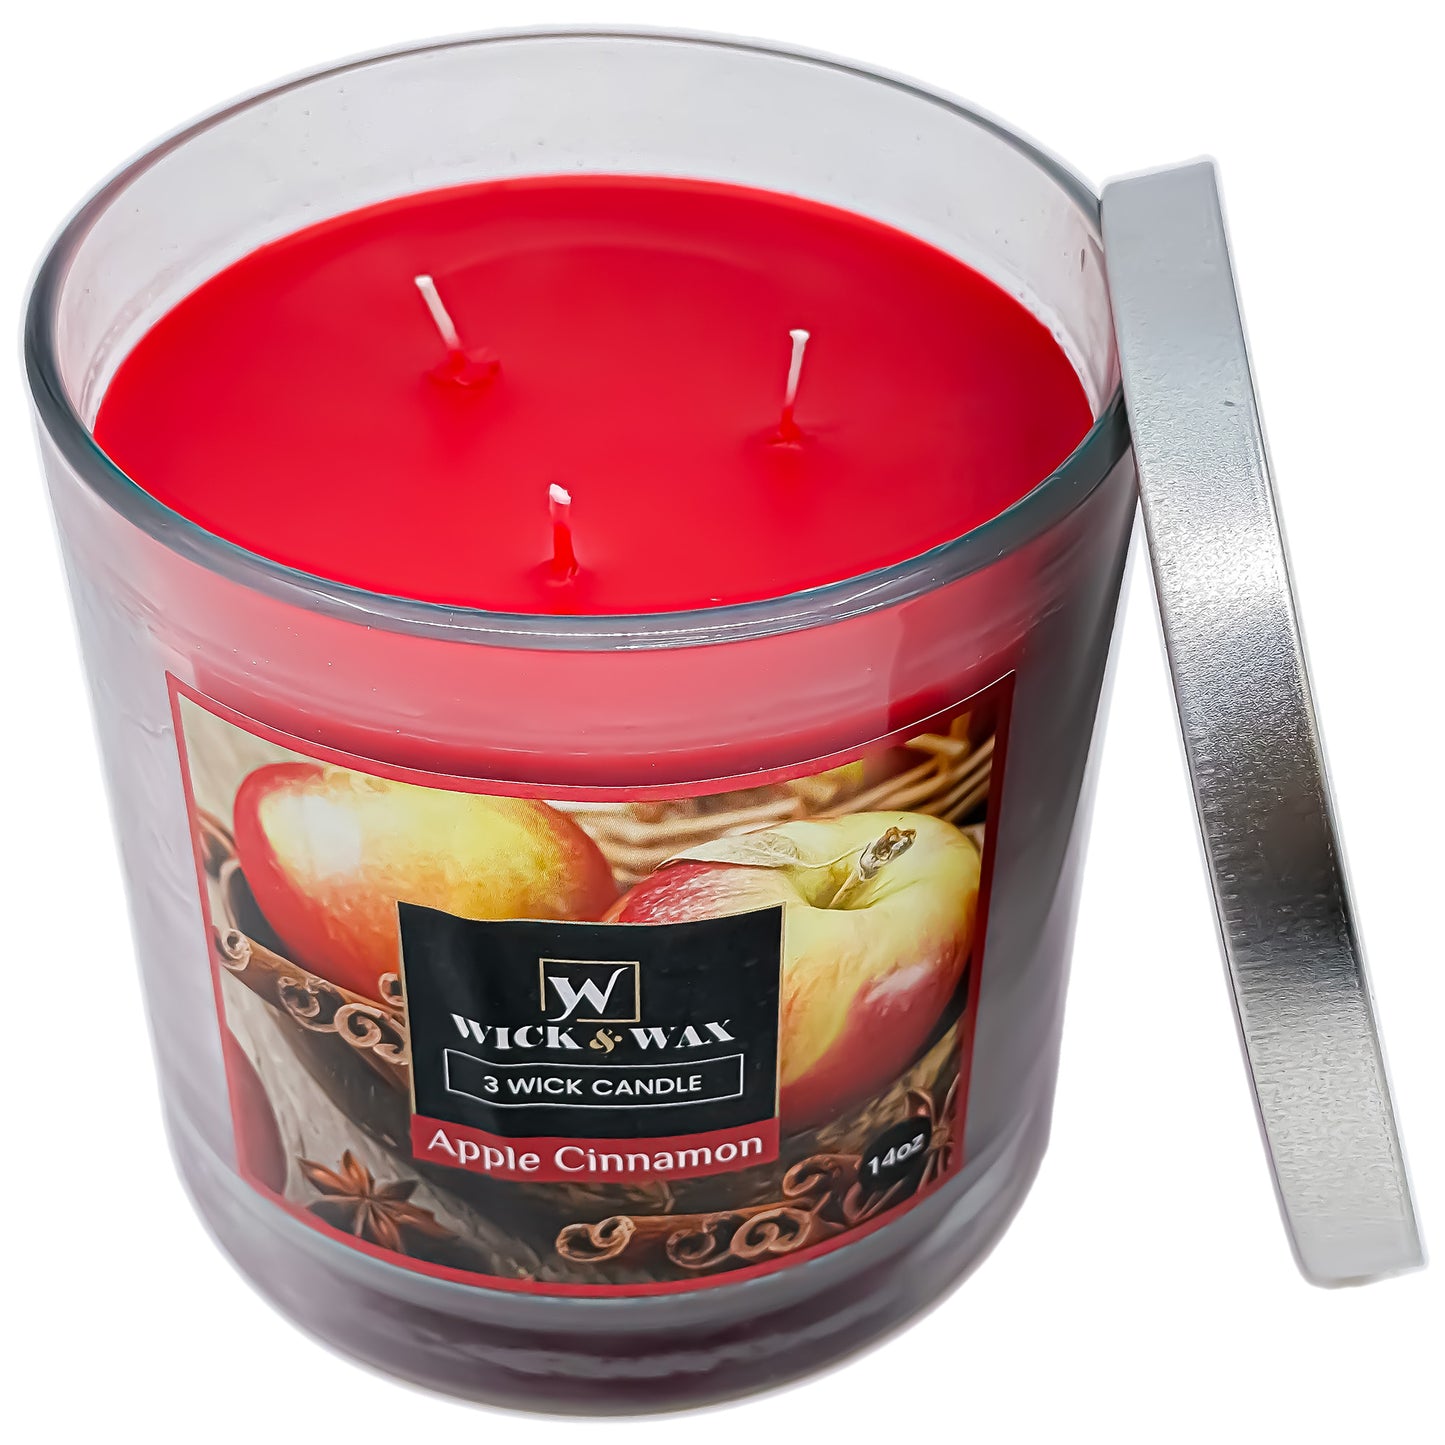 Apple Cinnamon Scented Jar Candle (3-wick) - 14oz.  WICK & WAX   